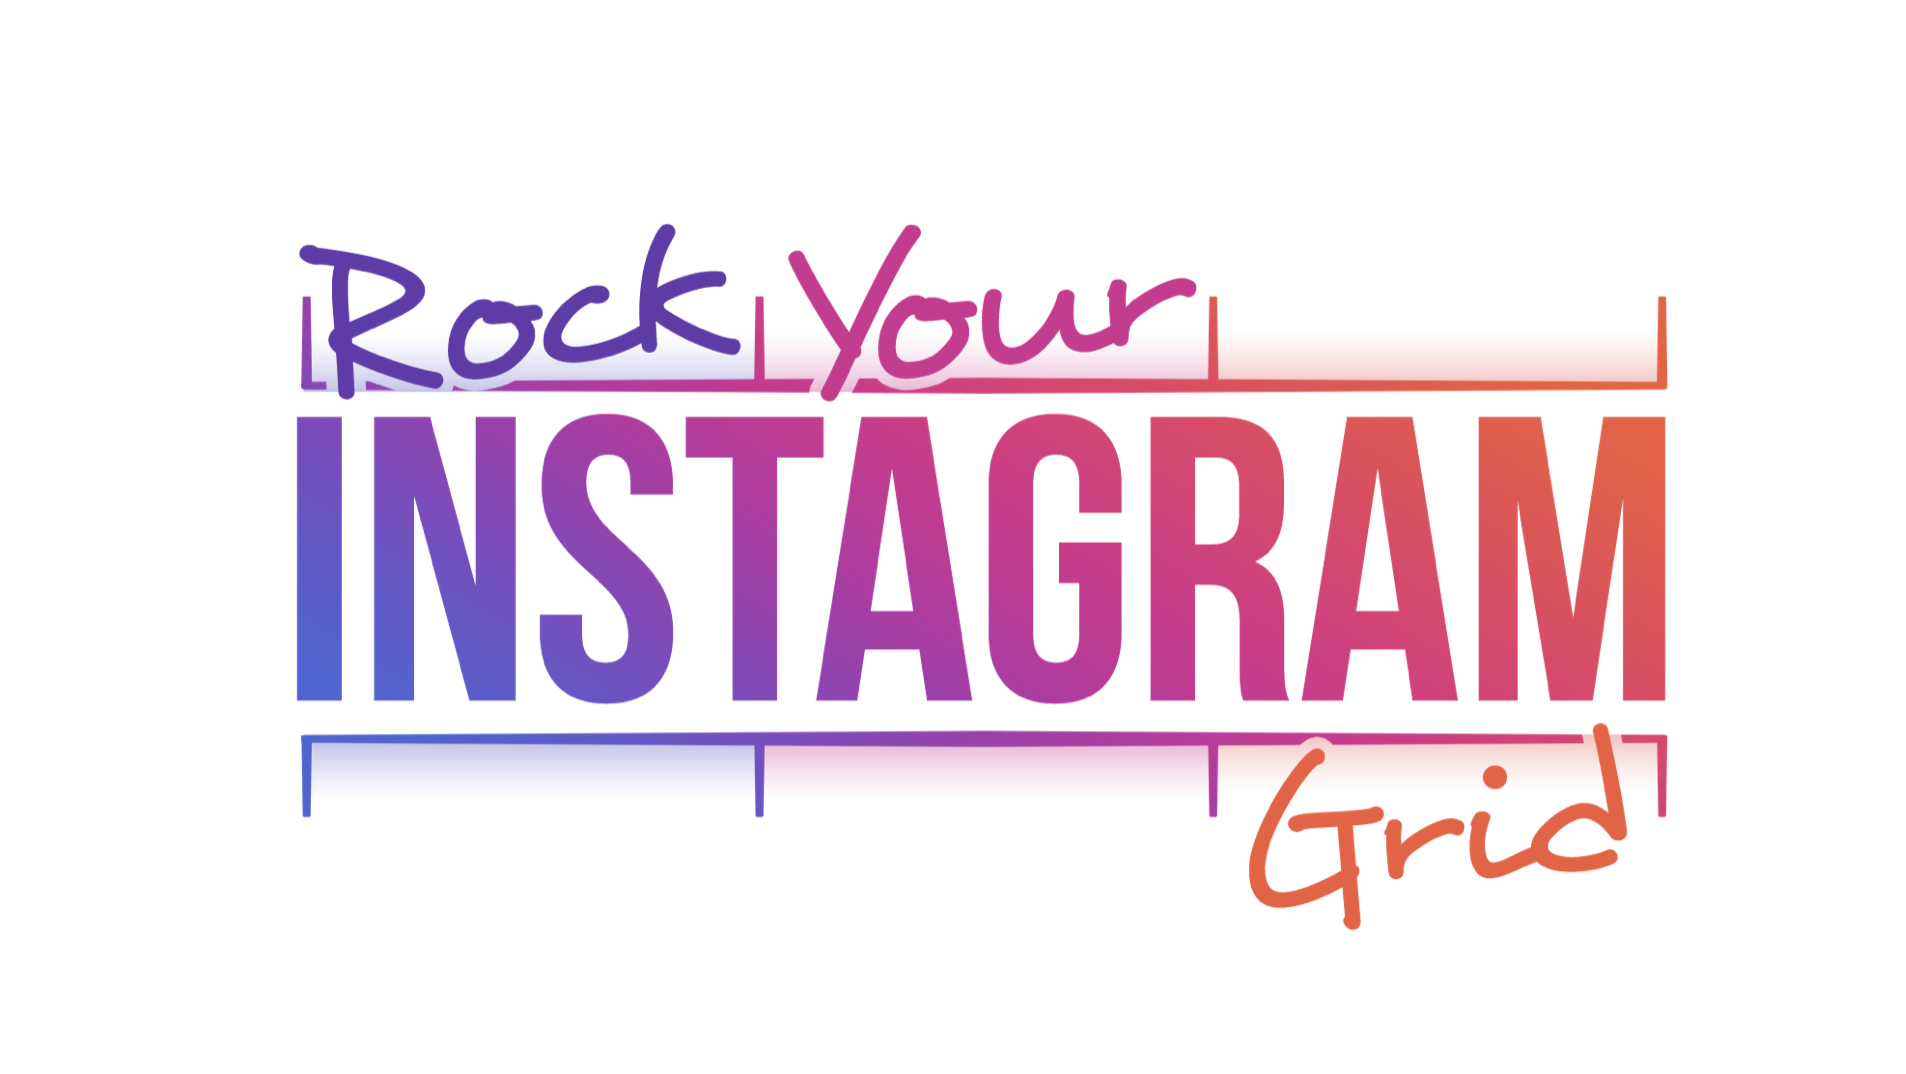 Rock your instagram grid Heidi Dean